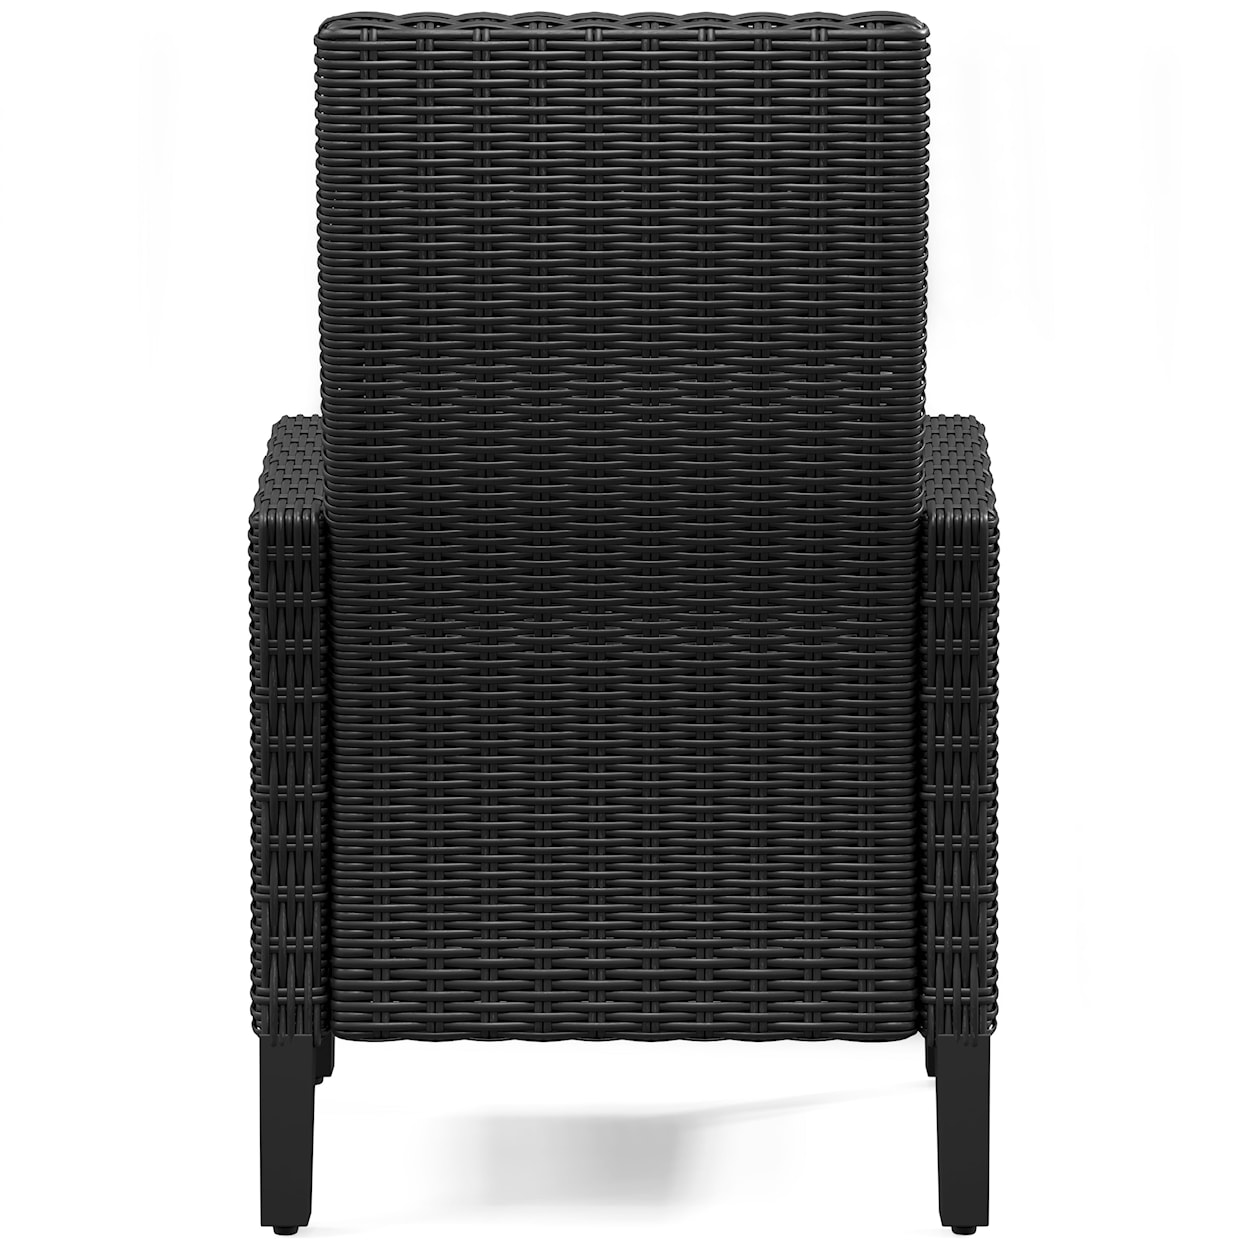 Ashley Furniture Signature Design Beachcroft Arm Chair with Cushion